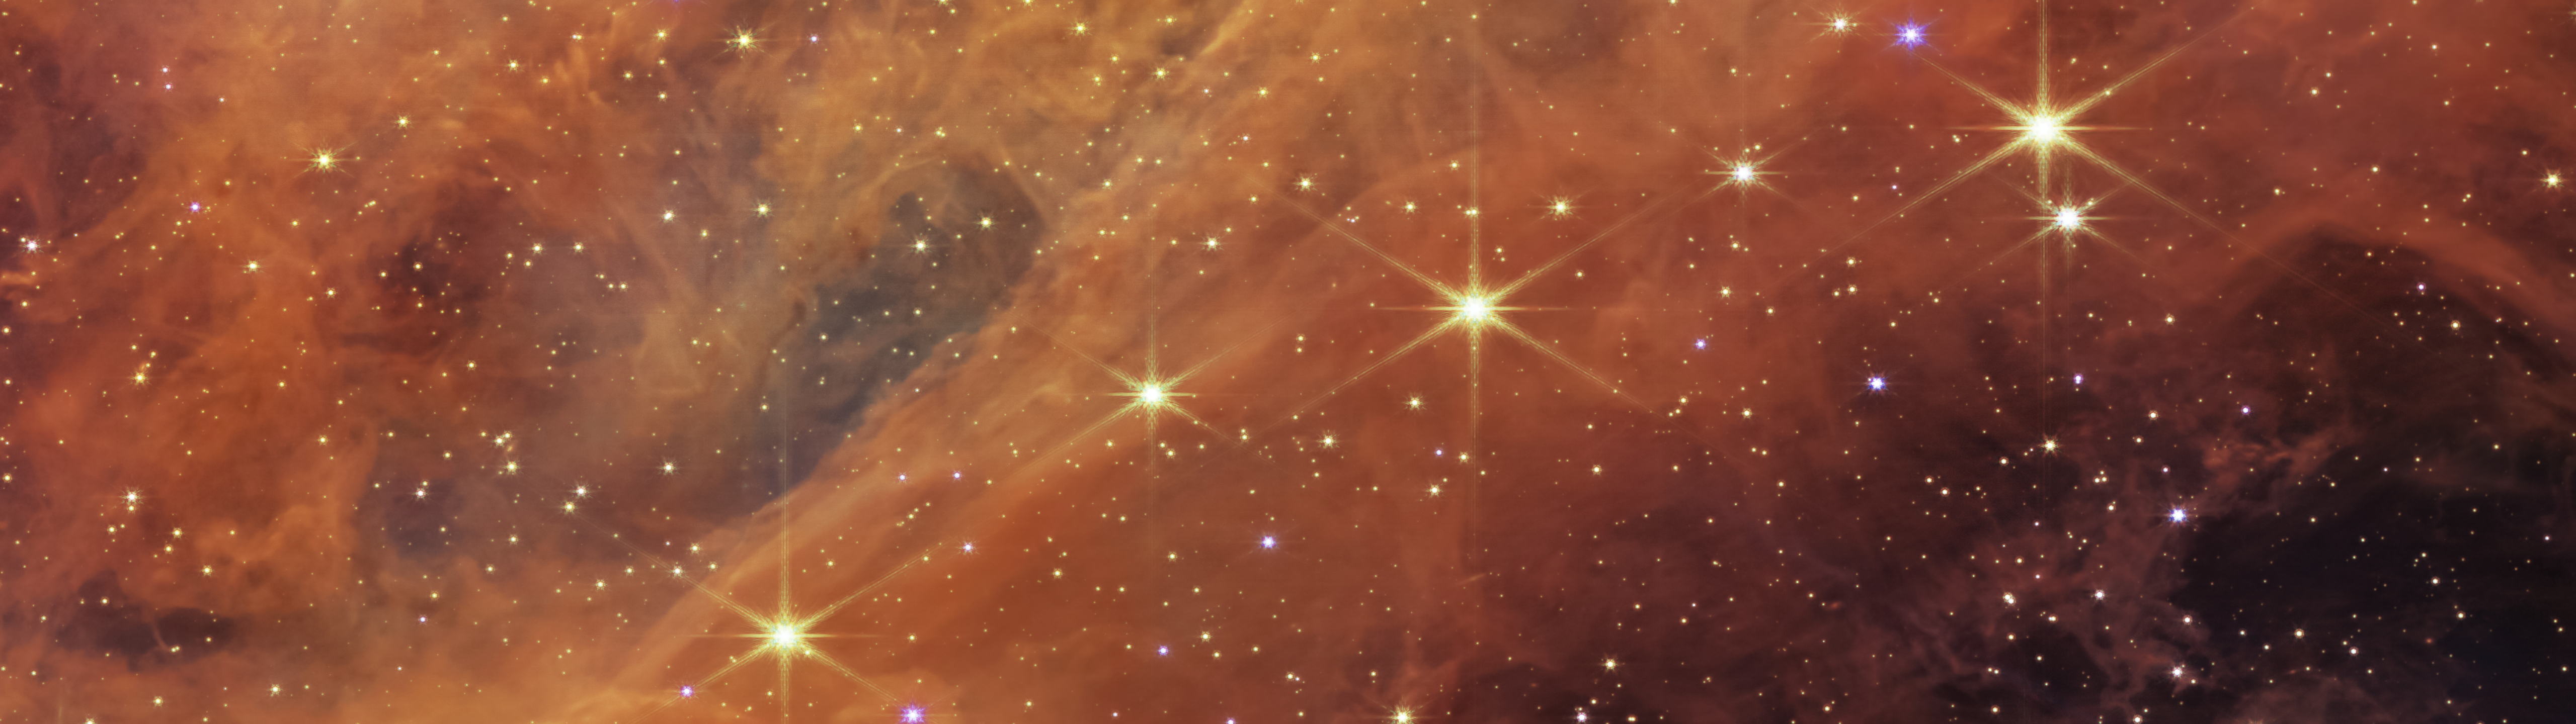 General 5120x1440 space James Webb Space Telescope nebula Carina Nebula NASA infrared stars NGC 3324